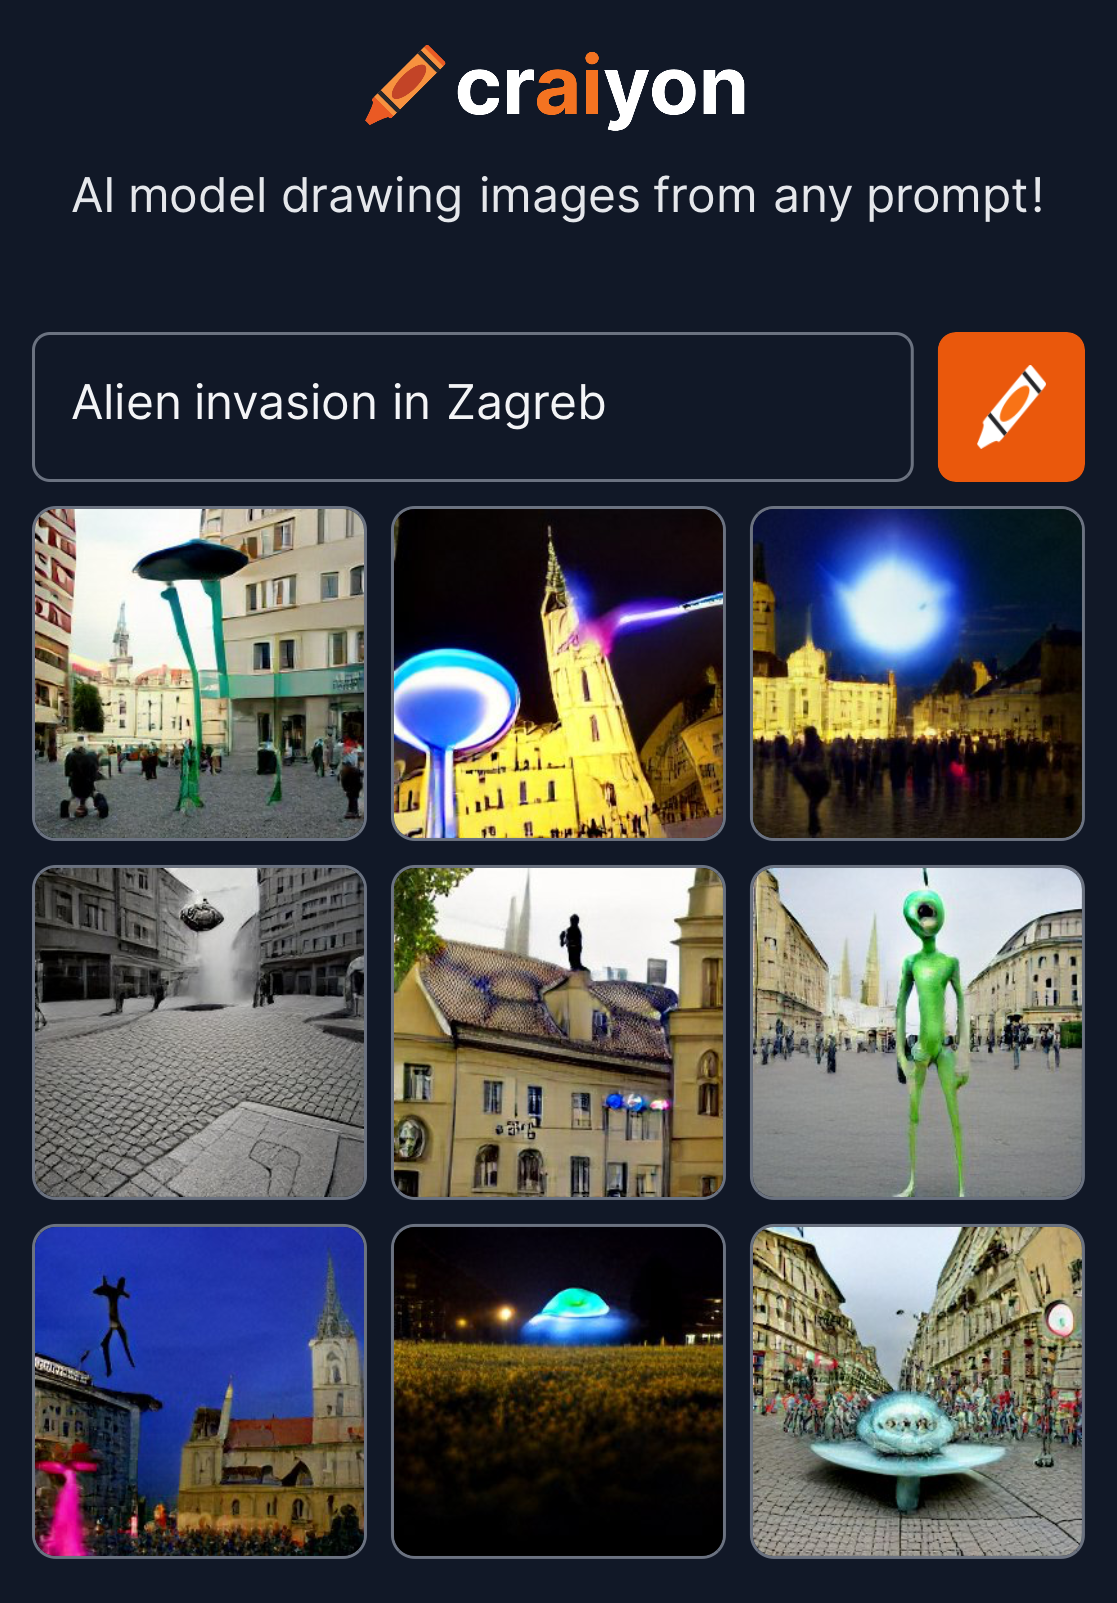 craiyon_221813_Alien_invasion_in_Zagreb.png